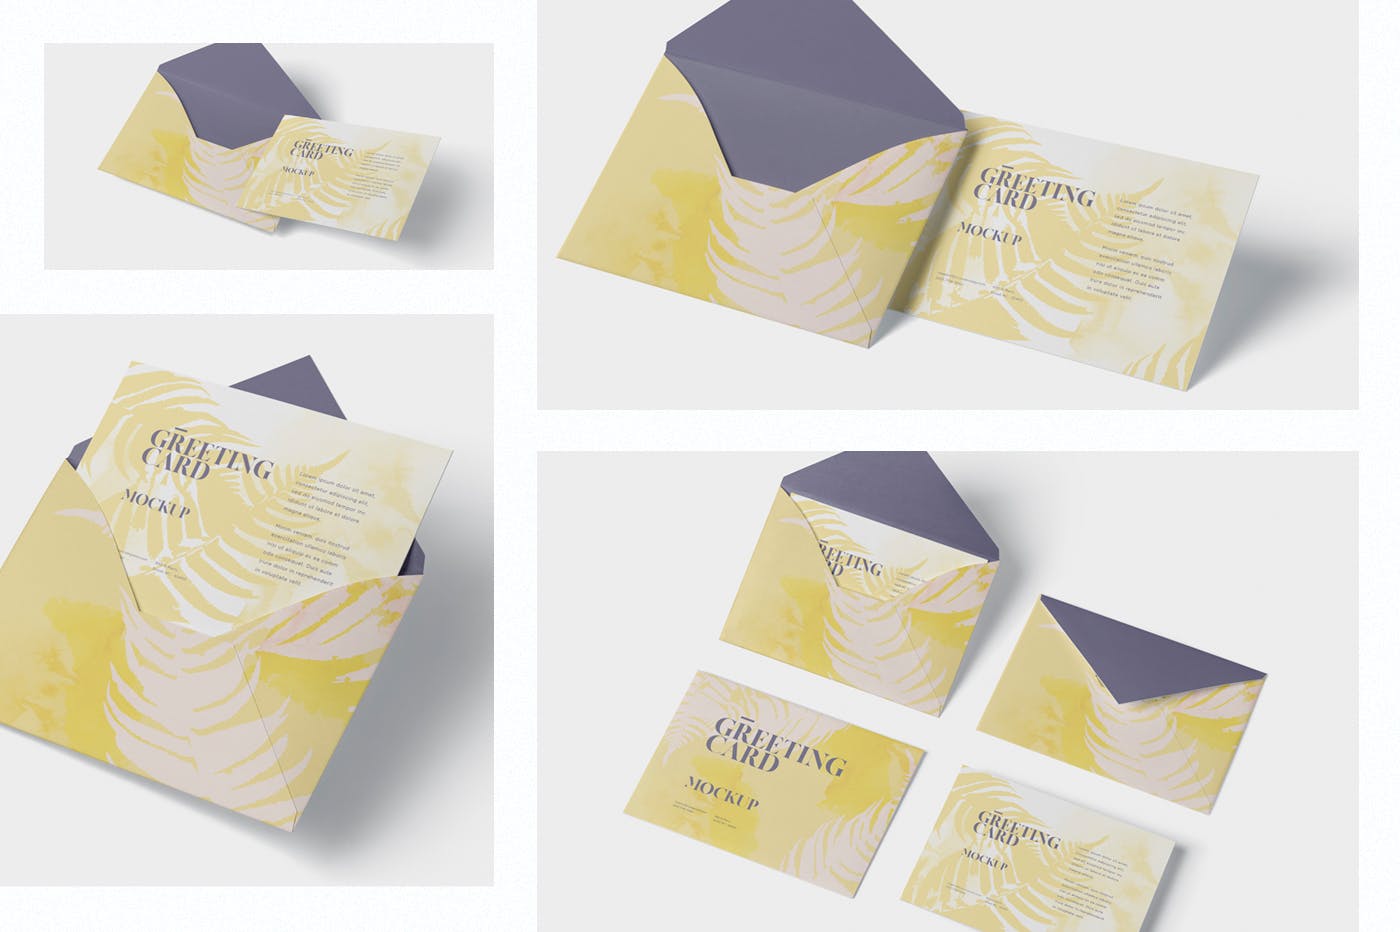 高端企业信封&贺卡设计图素材中国精选 Greeting Card Mockup with Envelope – A6 Size插图(1)